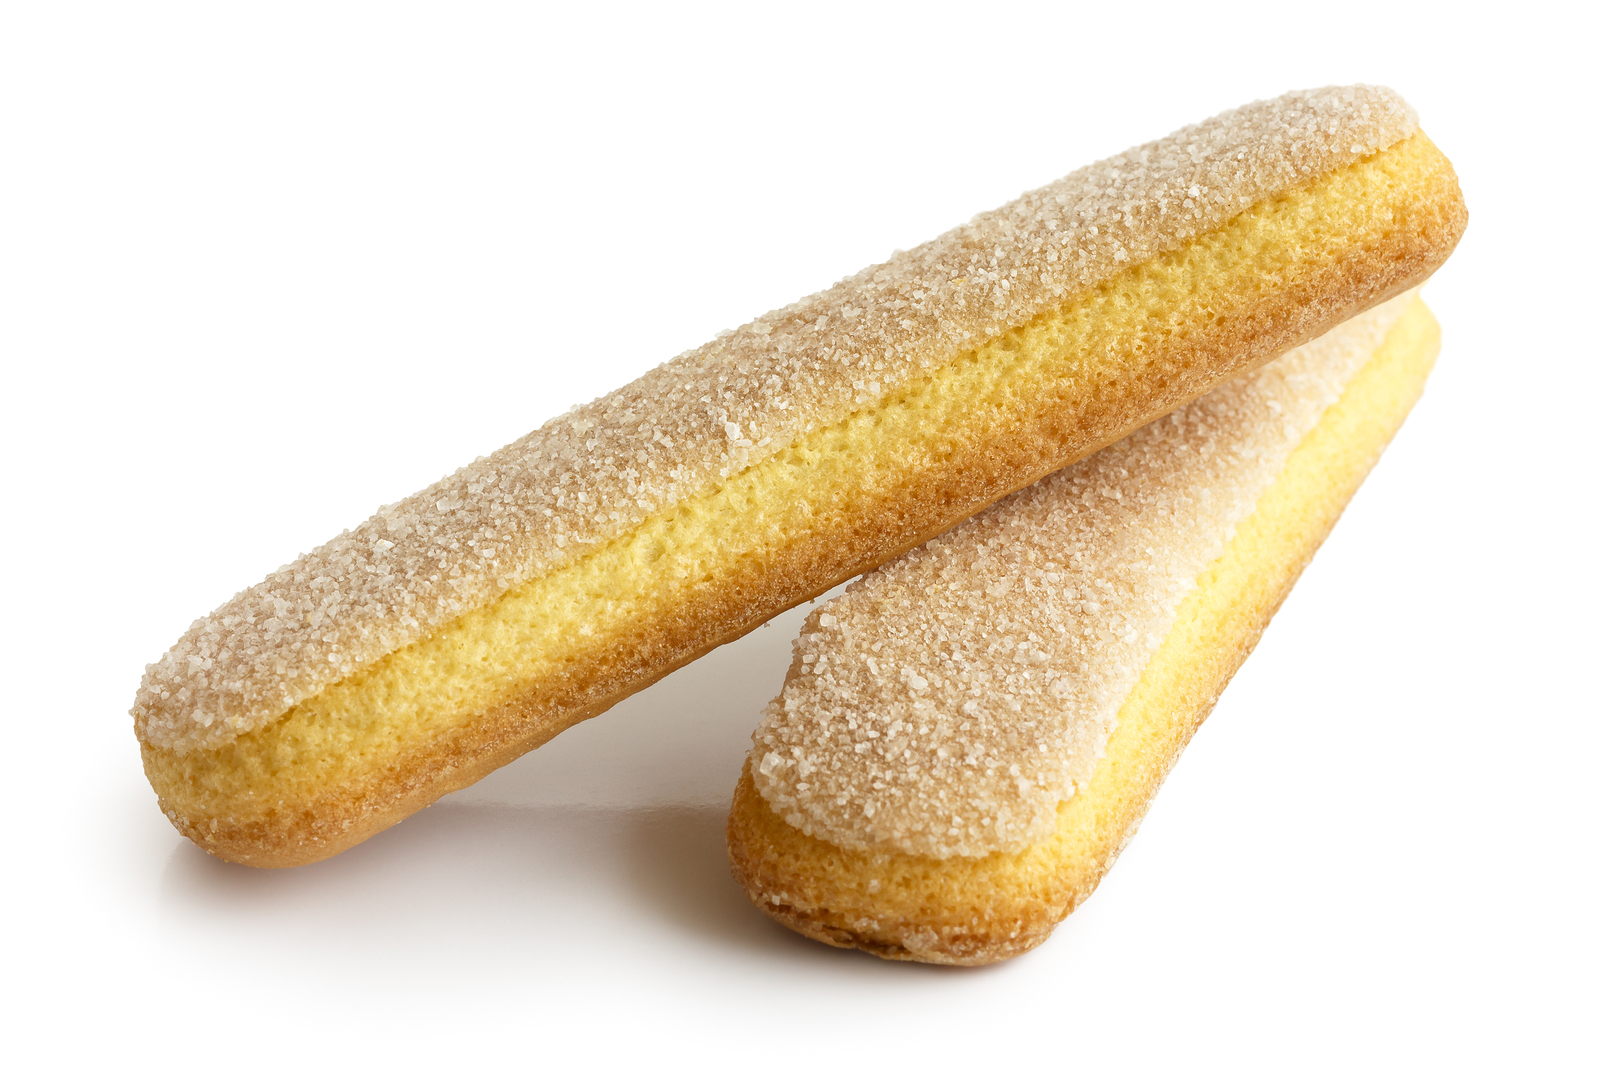 Ladyfinger sponge biscuits